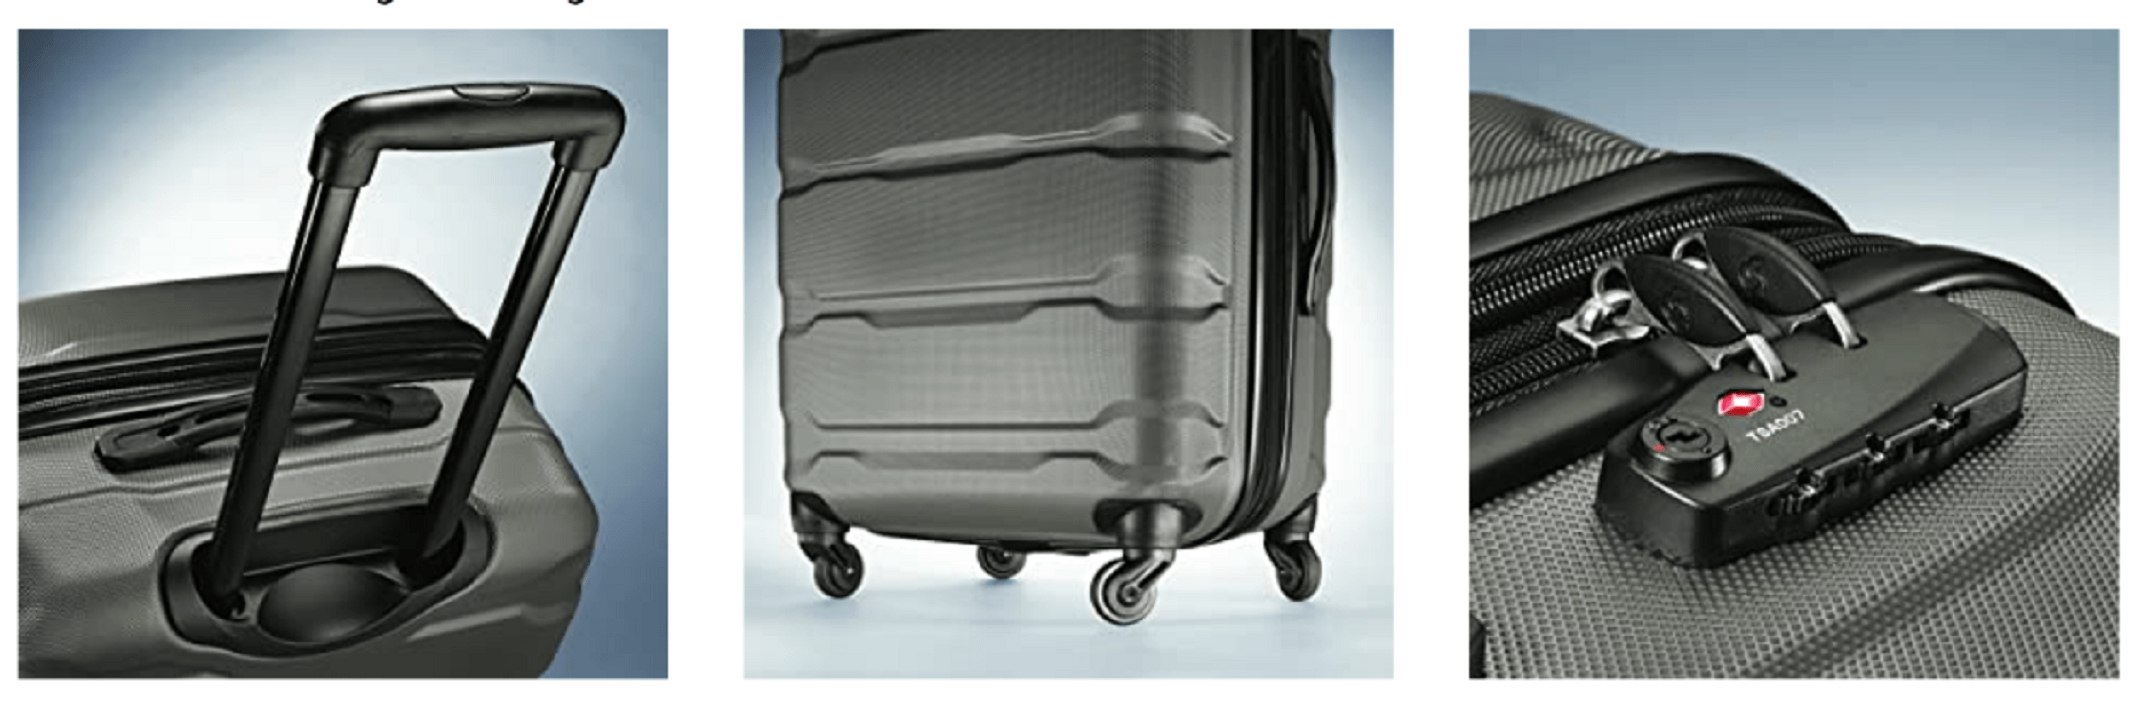 Amazon Samsonite Luggage bags